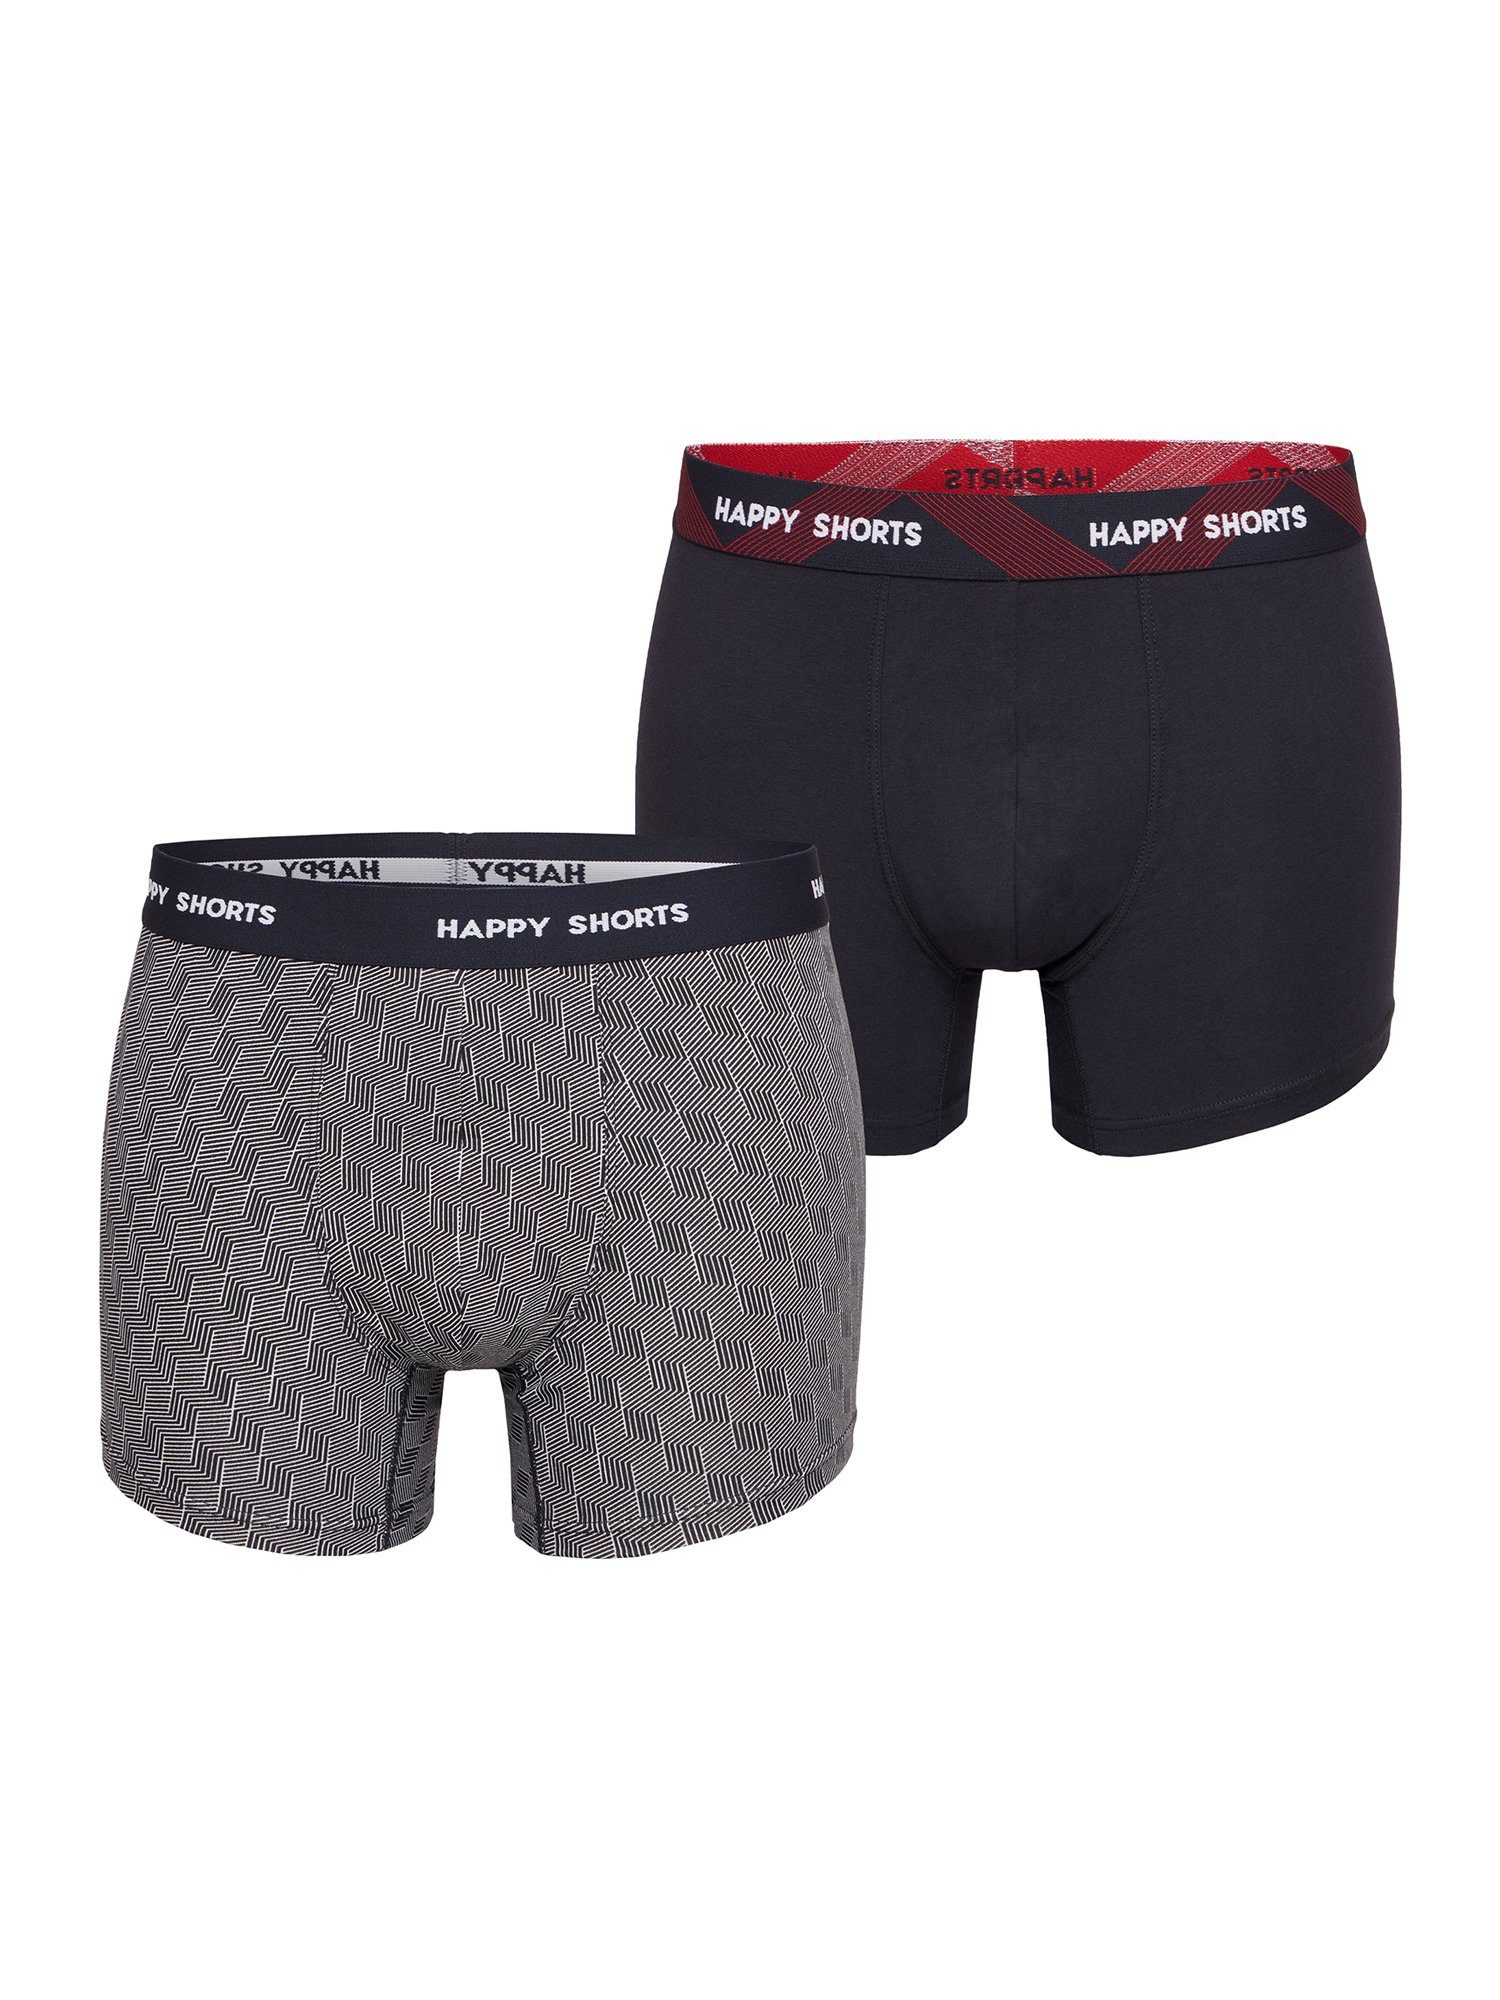 HAPPY SHORTS Retro Pants Trunks (2-St) Retro-Boxer Retro-shorts unterhose Abstract